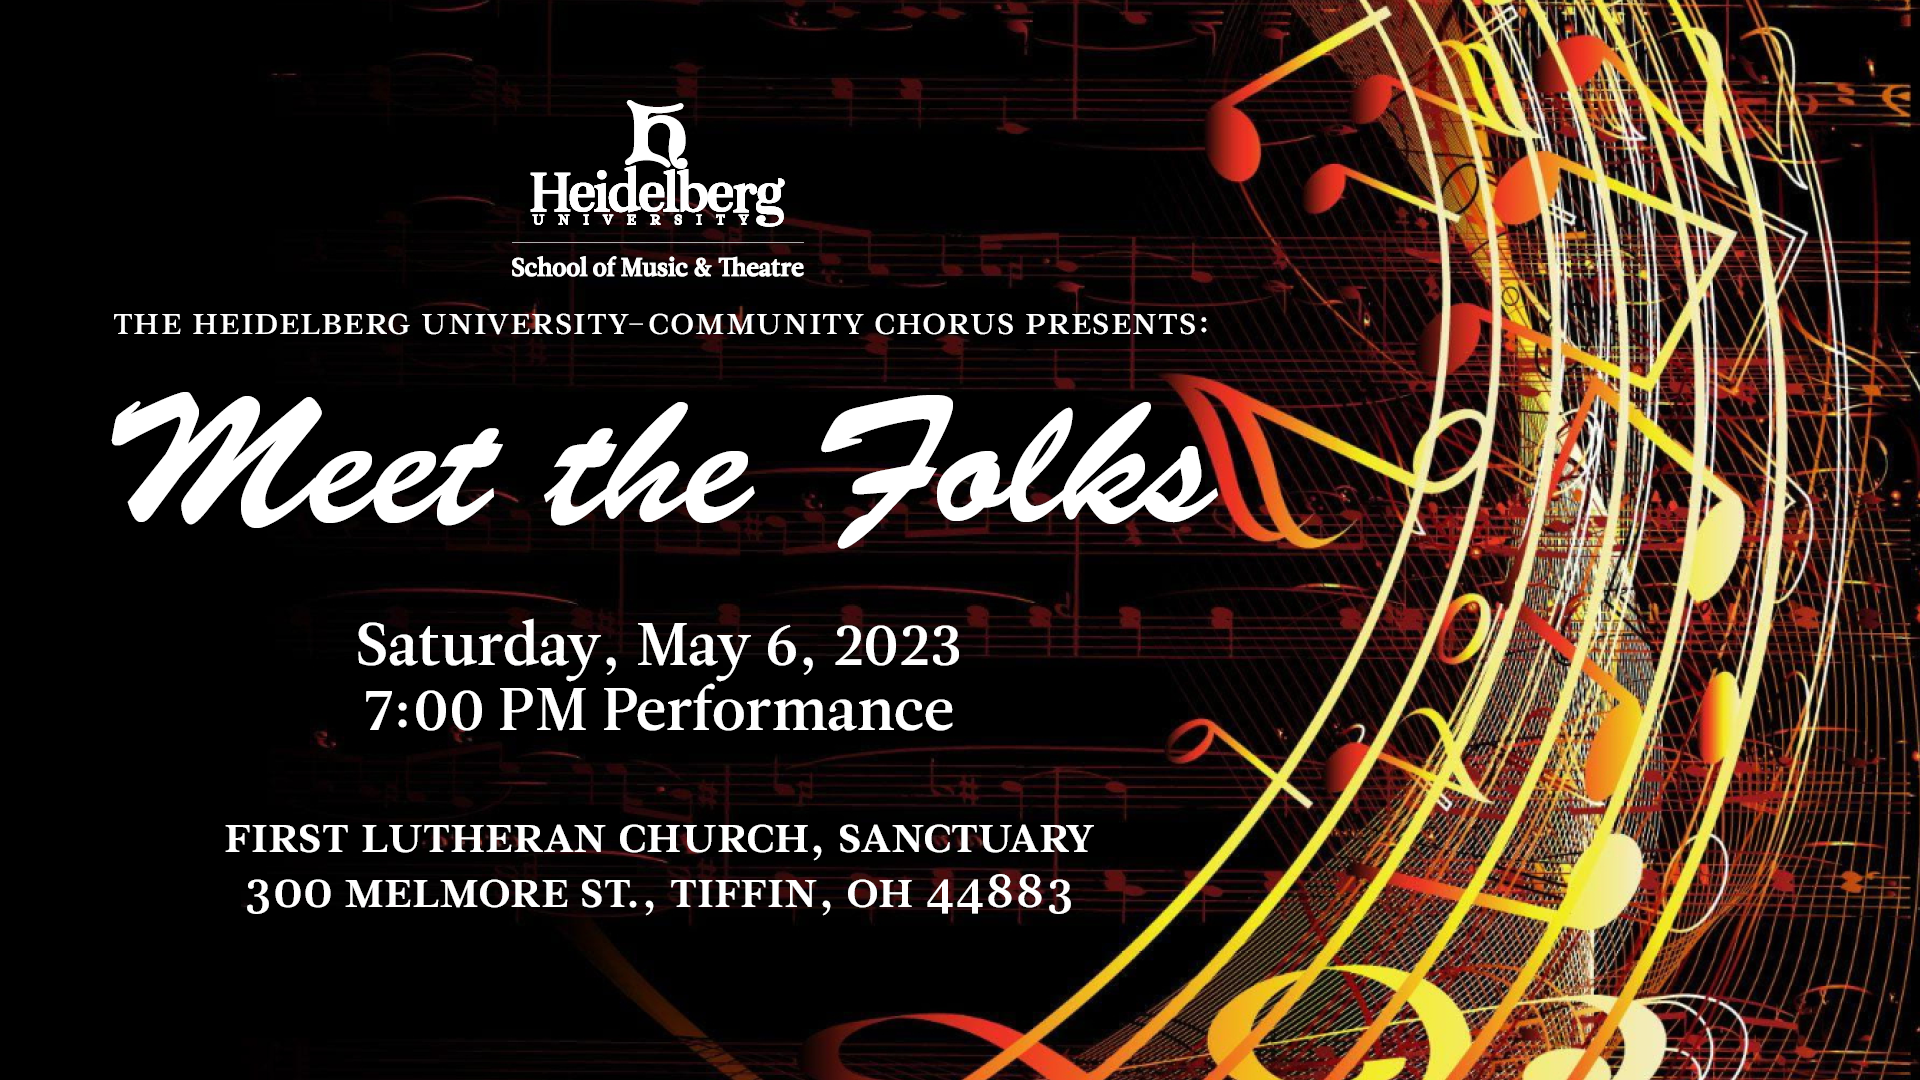 Heidelberg University-Community Chorus Concert